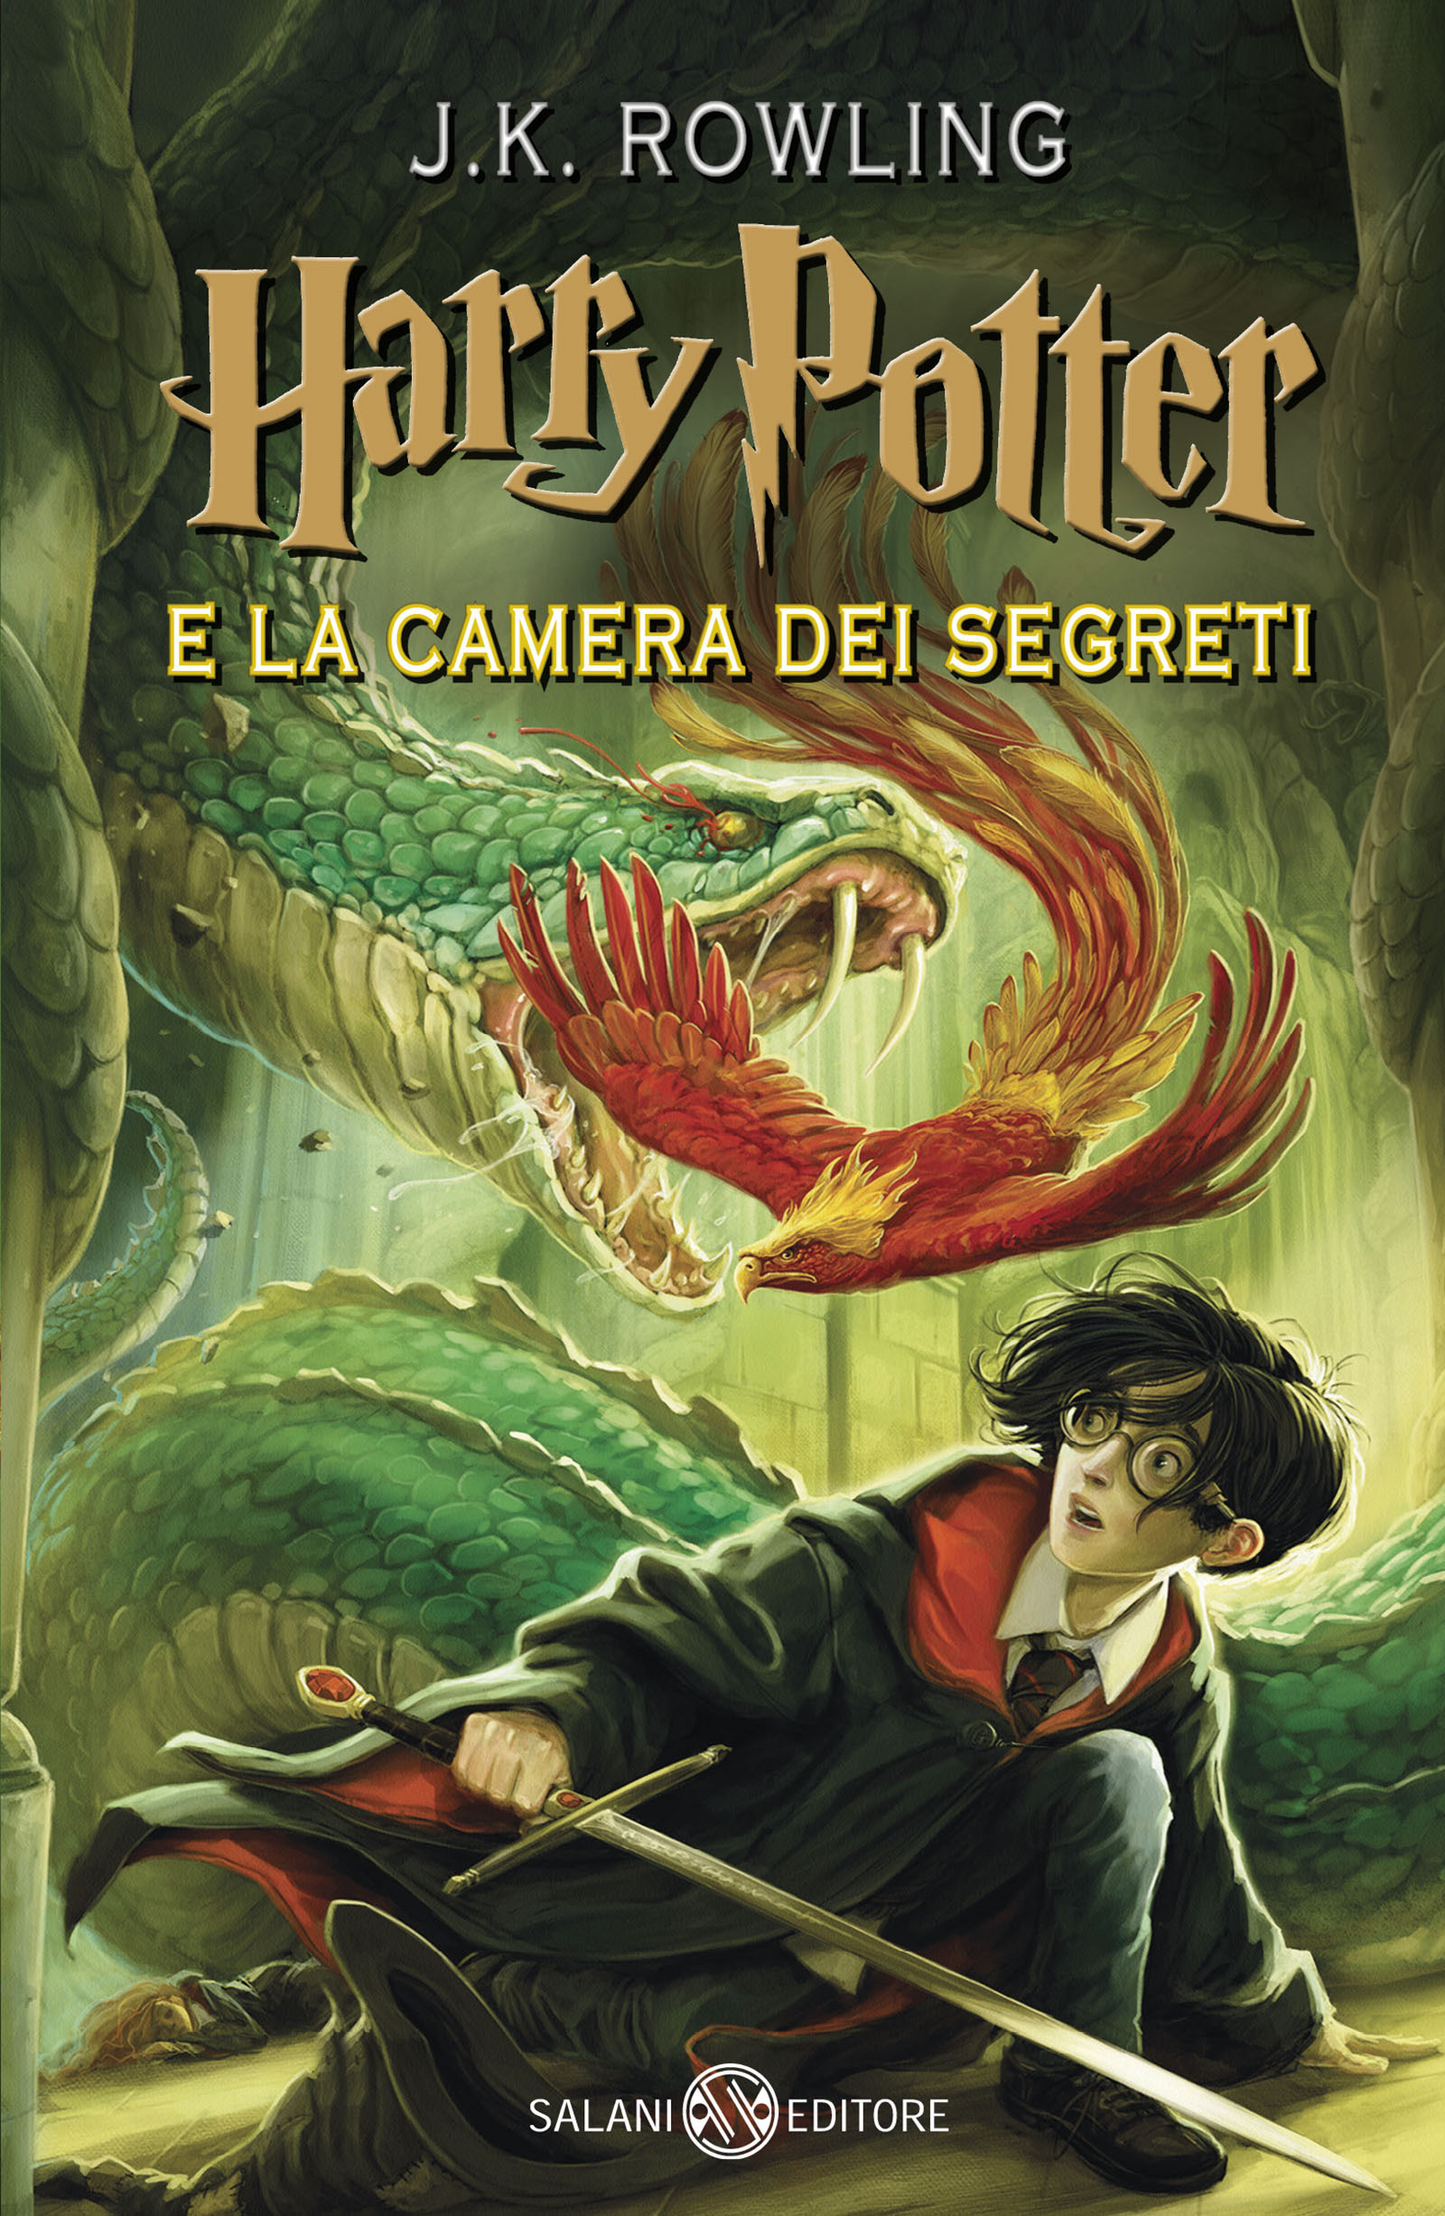 Harry Potter e la camera dei segreti Tascabile (Vol. 2) - J. K. Rowling - Salani